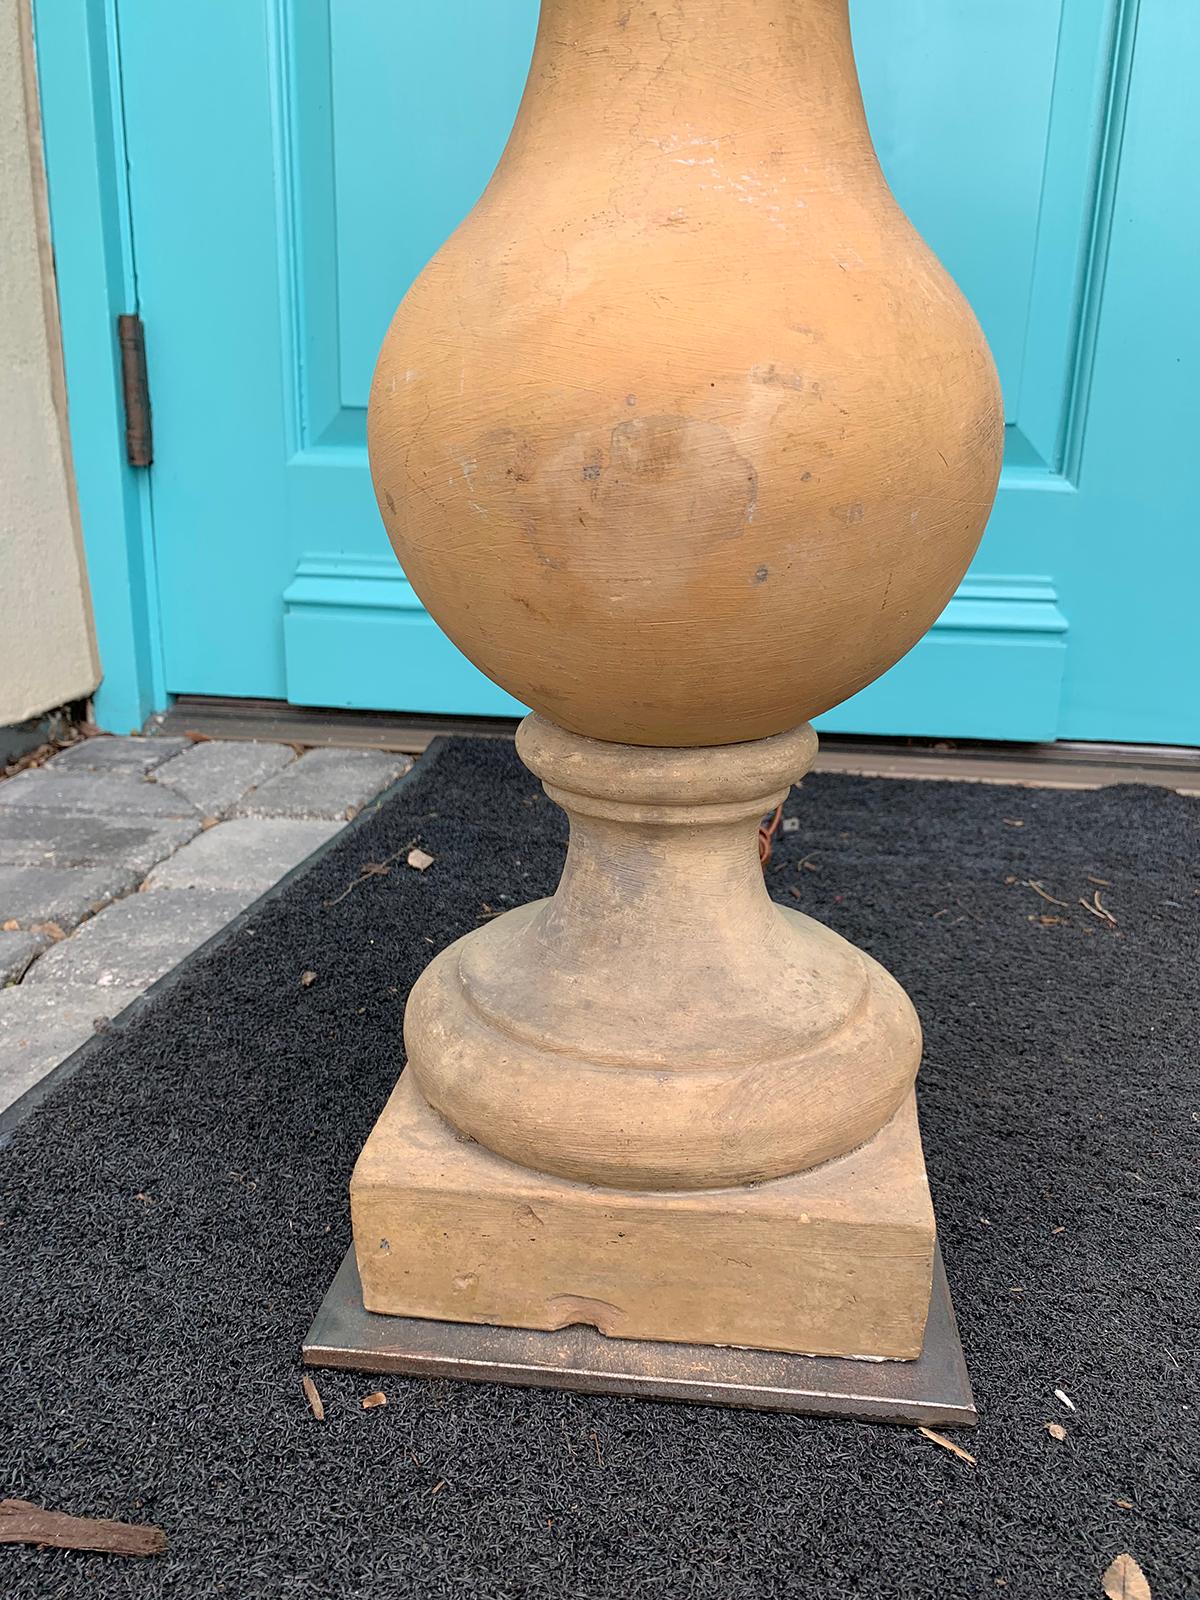 19th-20th Century Terracotta Balustrade Lamp 1